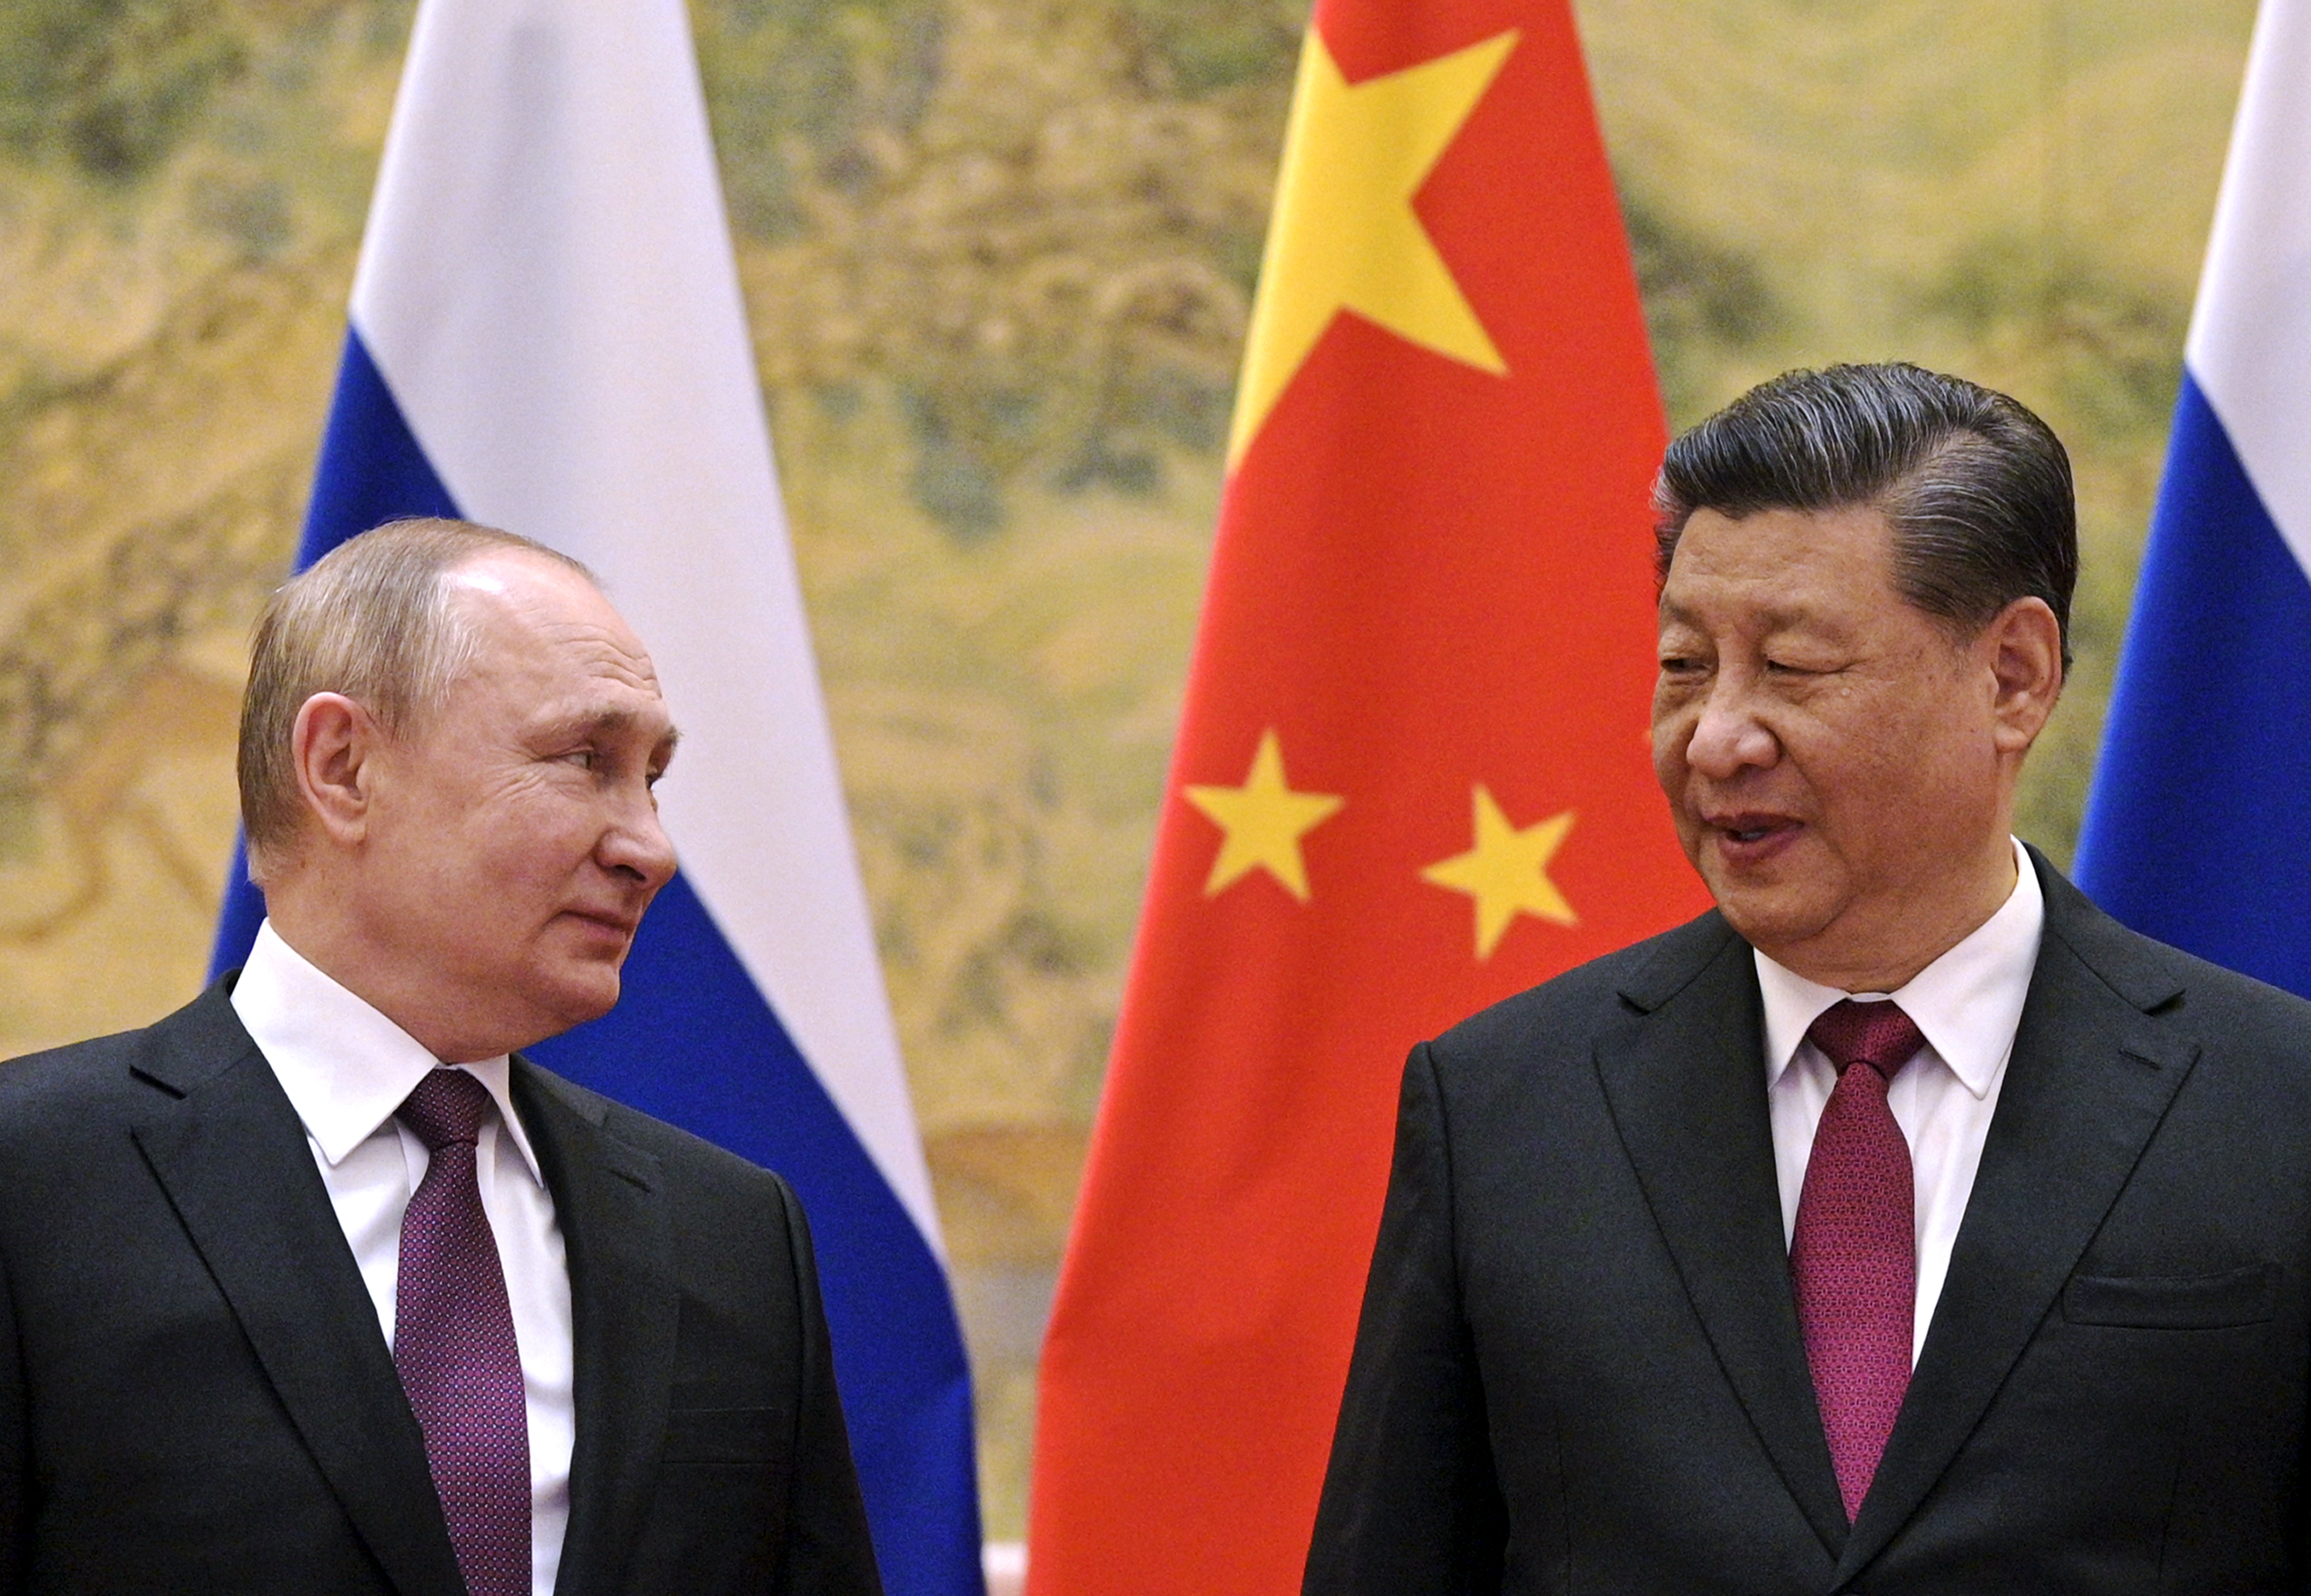 Xi Jinping efectuará una visita de Estado a Rusia del 20 al 22 de marzo. (AP)